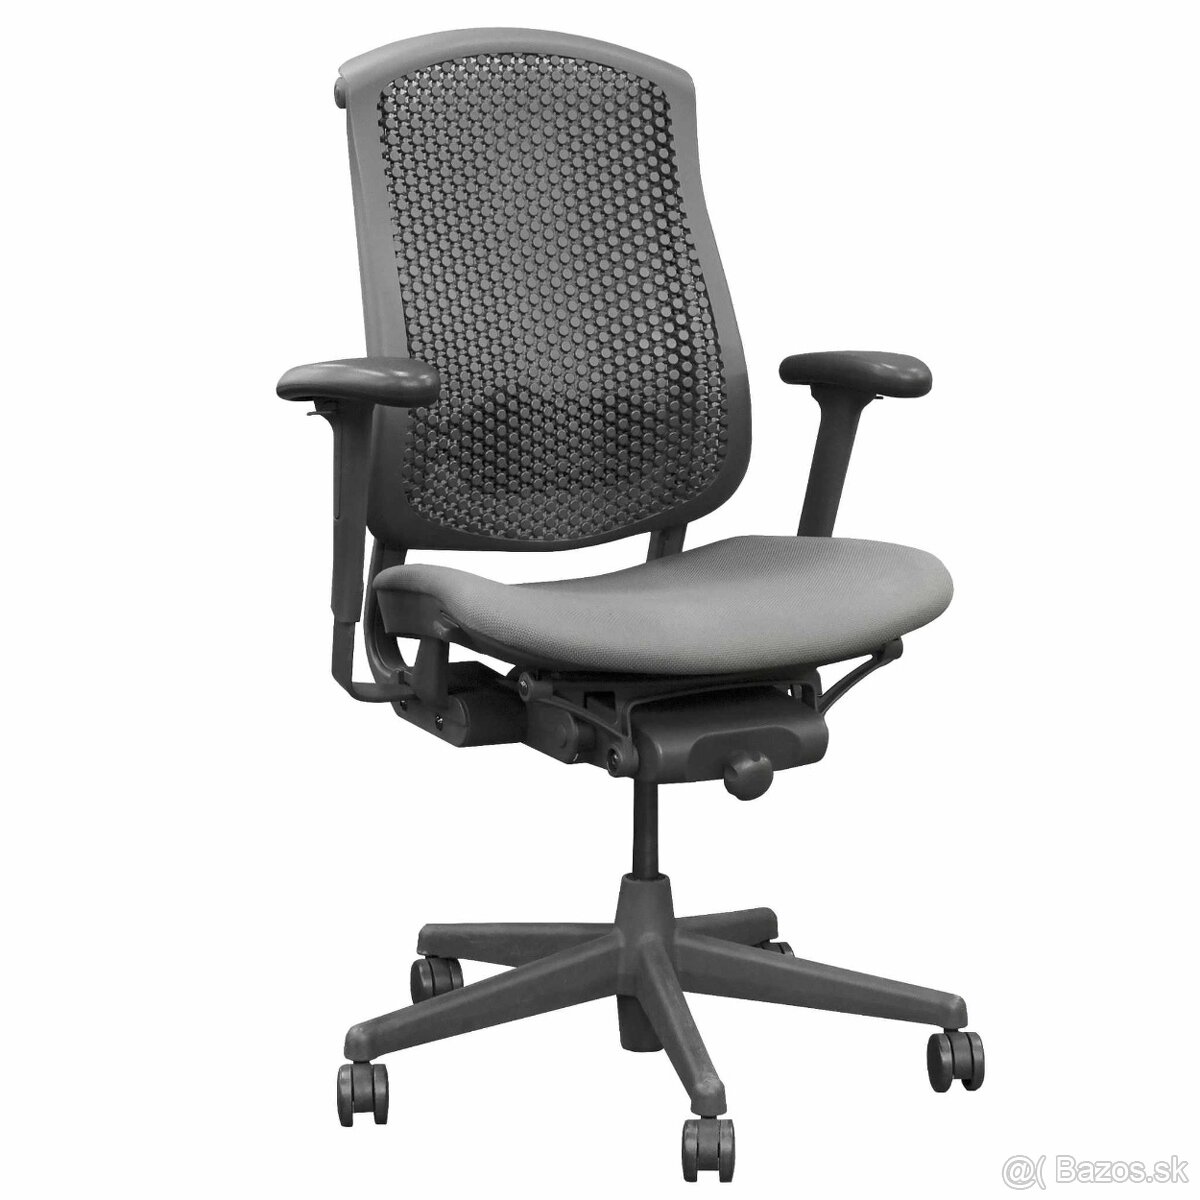 Kvalitná kancelárska stolička Herman Miller nosnosť 160kg